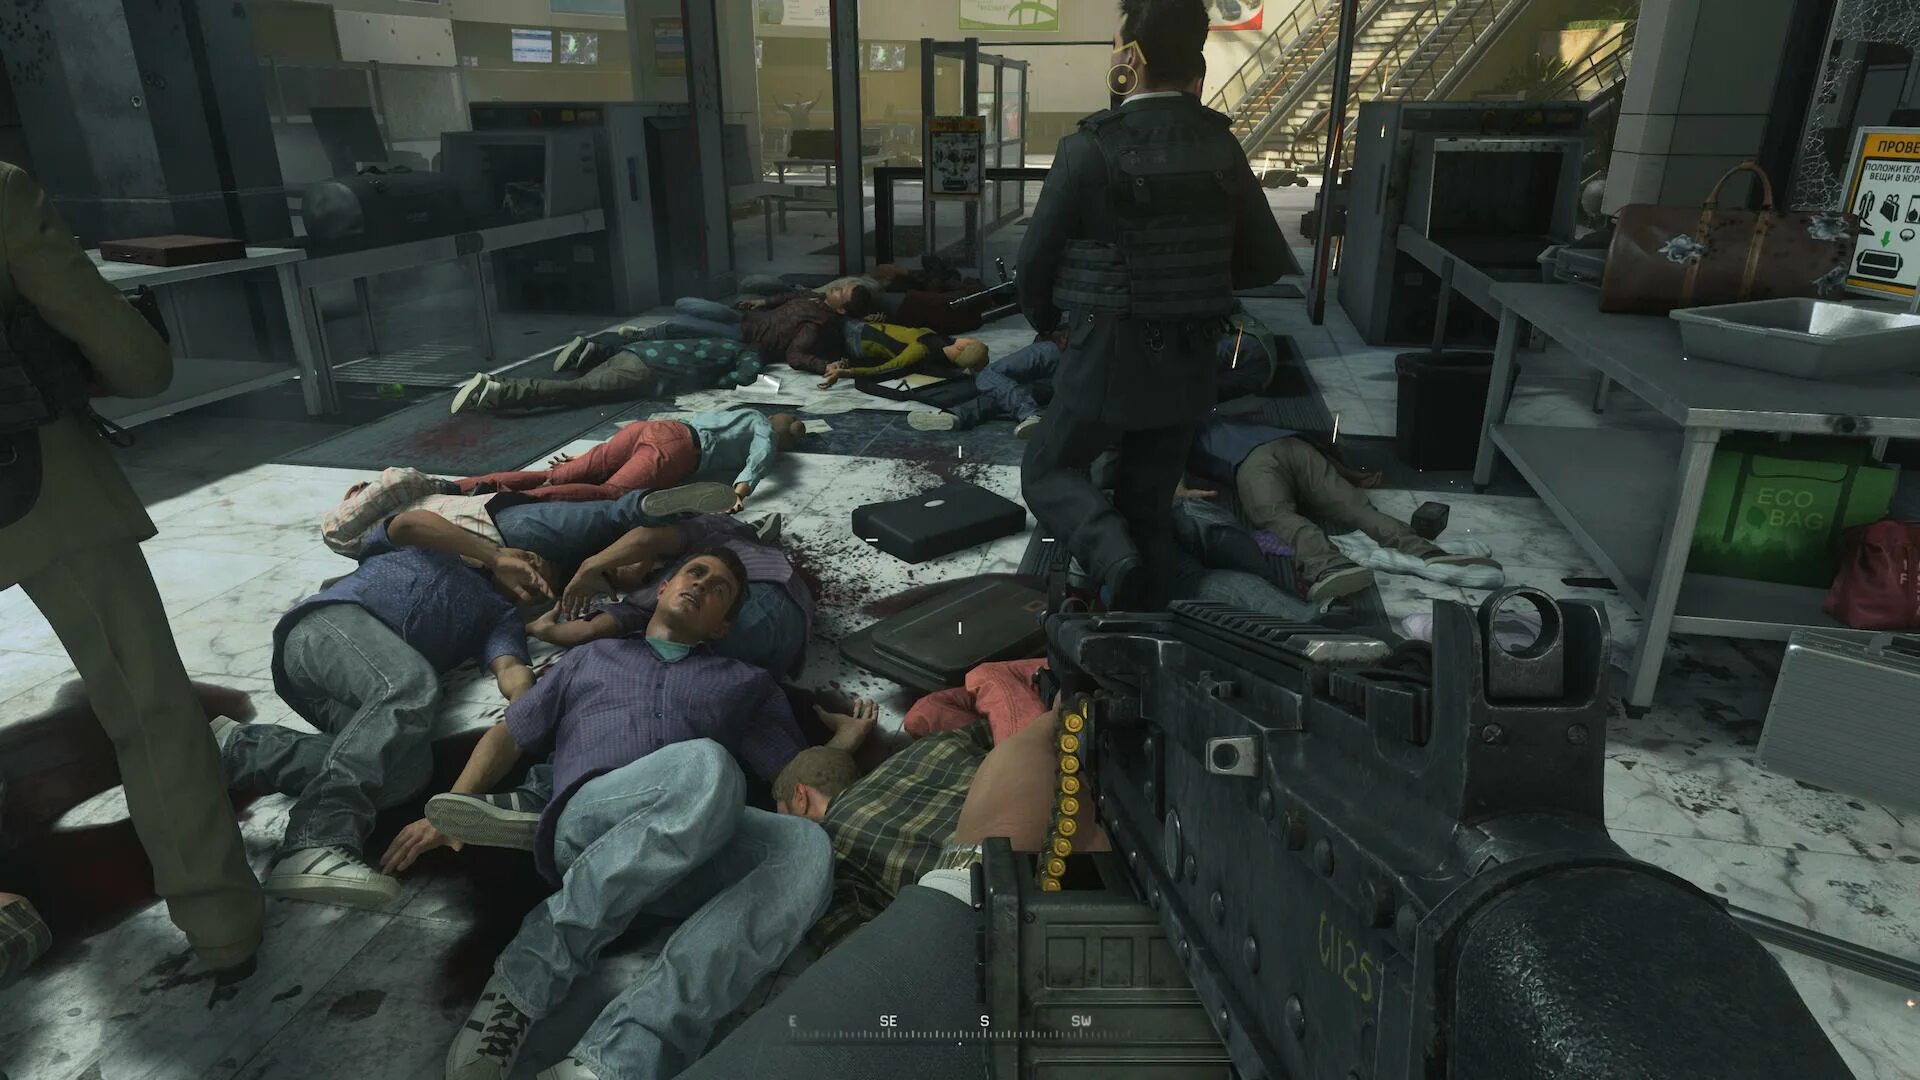 Call of Duty Modern Warfare 2 REMASTEREDREMASTERED. Call of Duty Modern Warfare 2 Remastered. Call of Duty: Modern Warfare 2 campaign Remastered. Call of Duty Modern Warfare 2 ремастер. Требования кал оф дьюти модерн варфаер 2